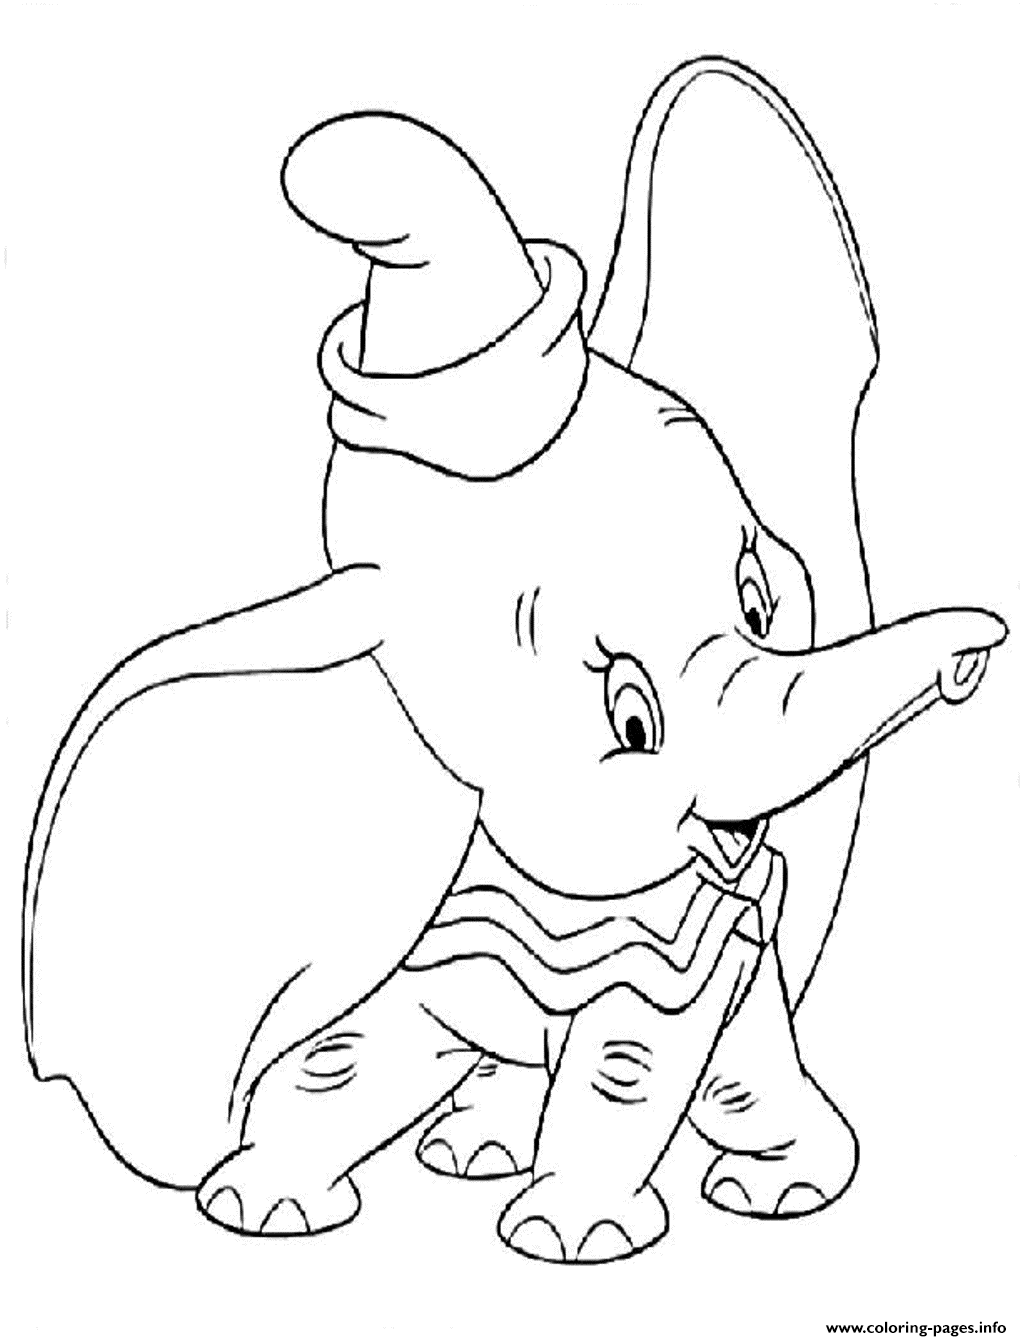 Cute Dumbo Cartoon S For Kids4b67 coloring